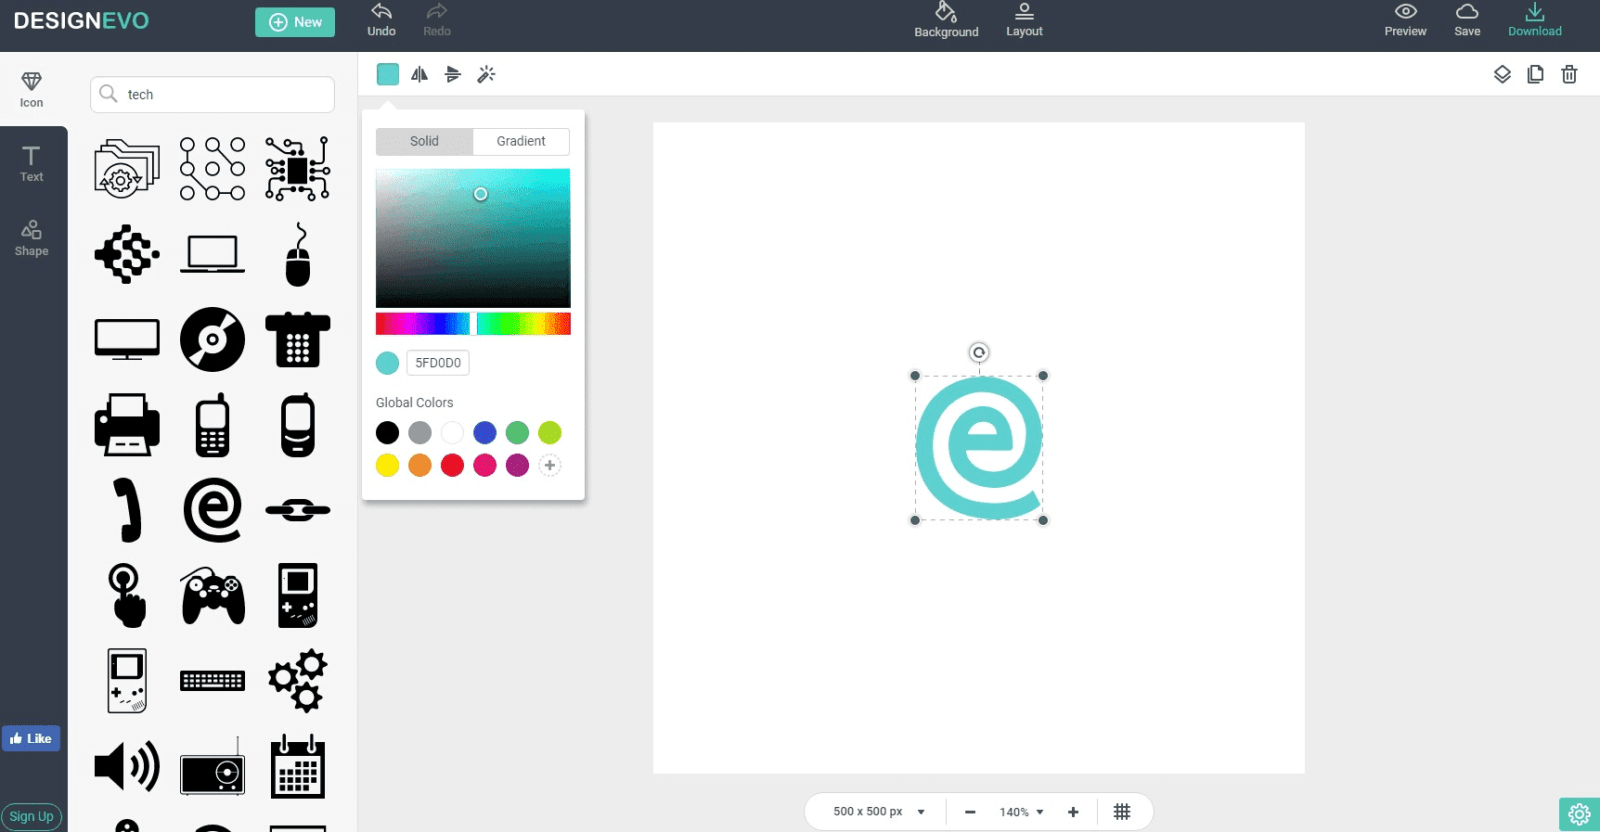 word image 1 - Make Professional Logos Online with DesignEvo Logo Maker